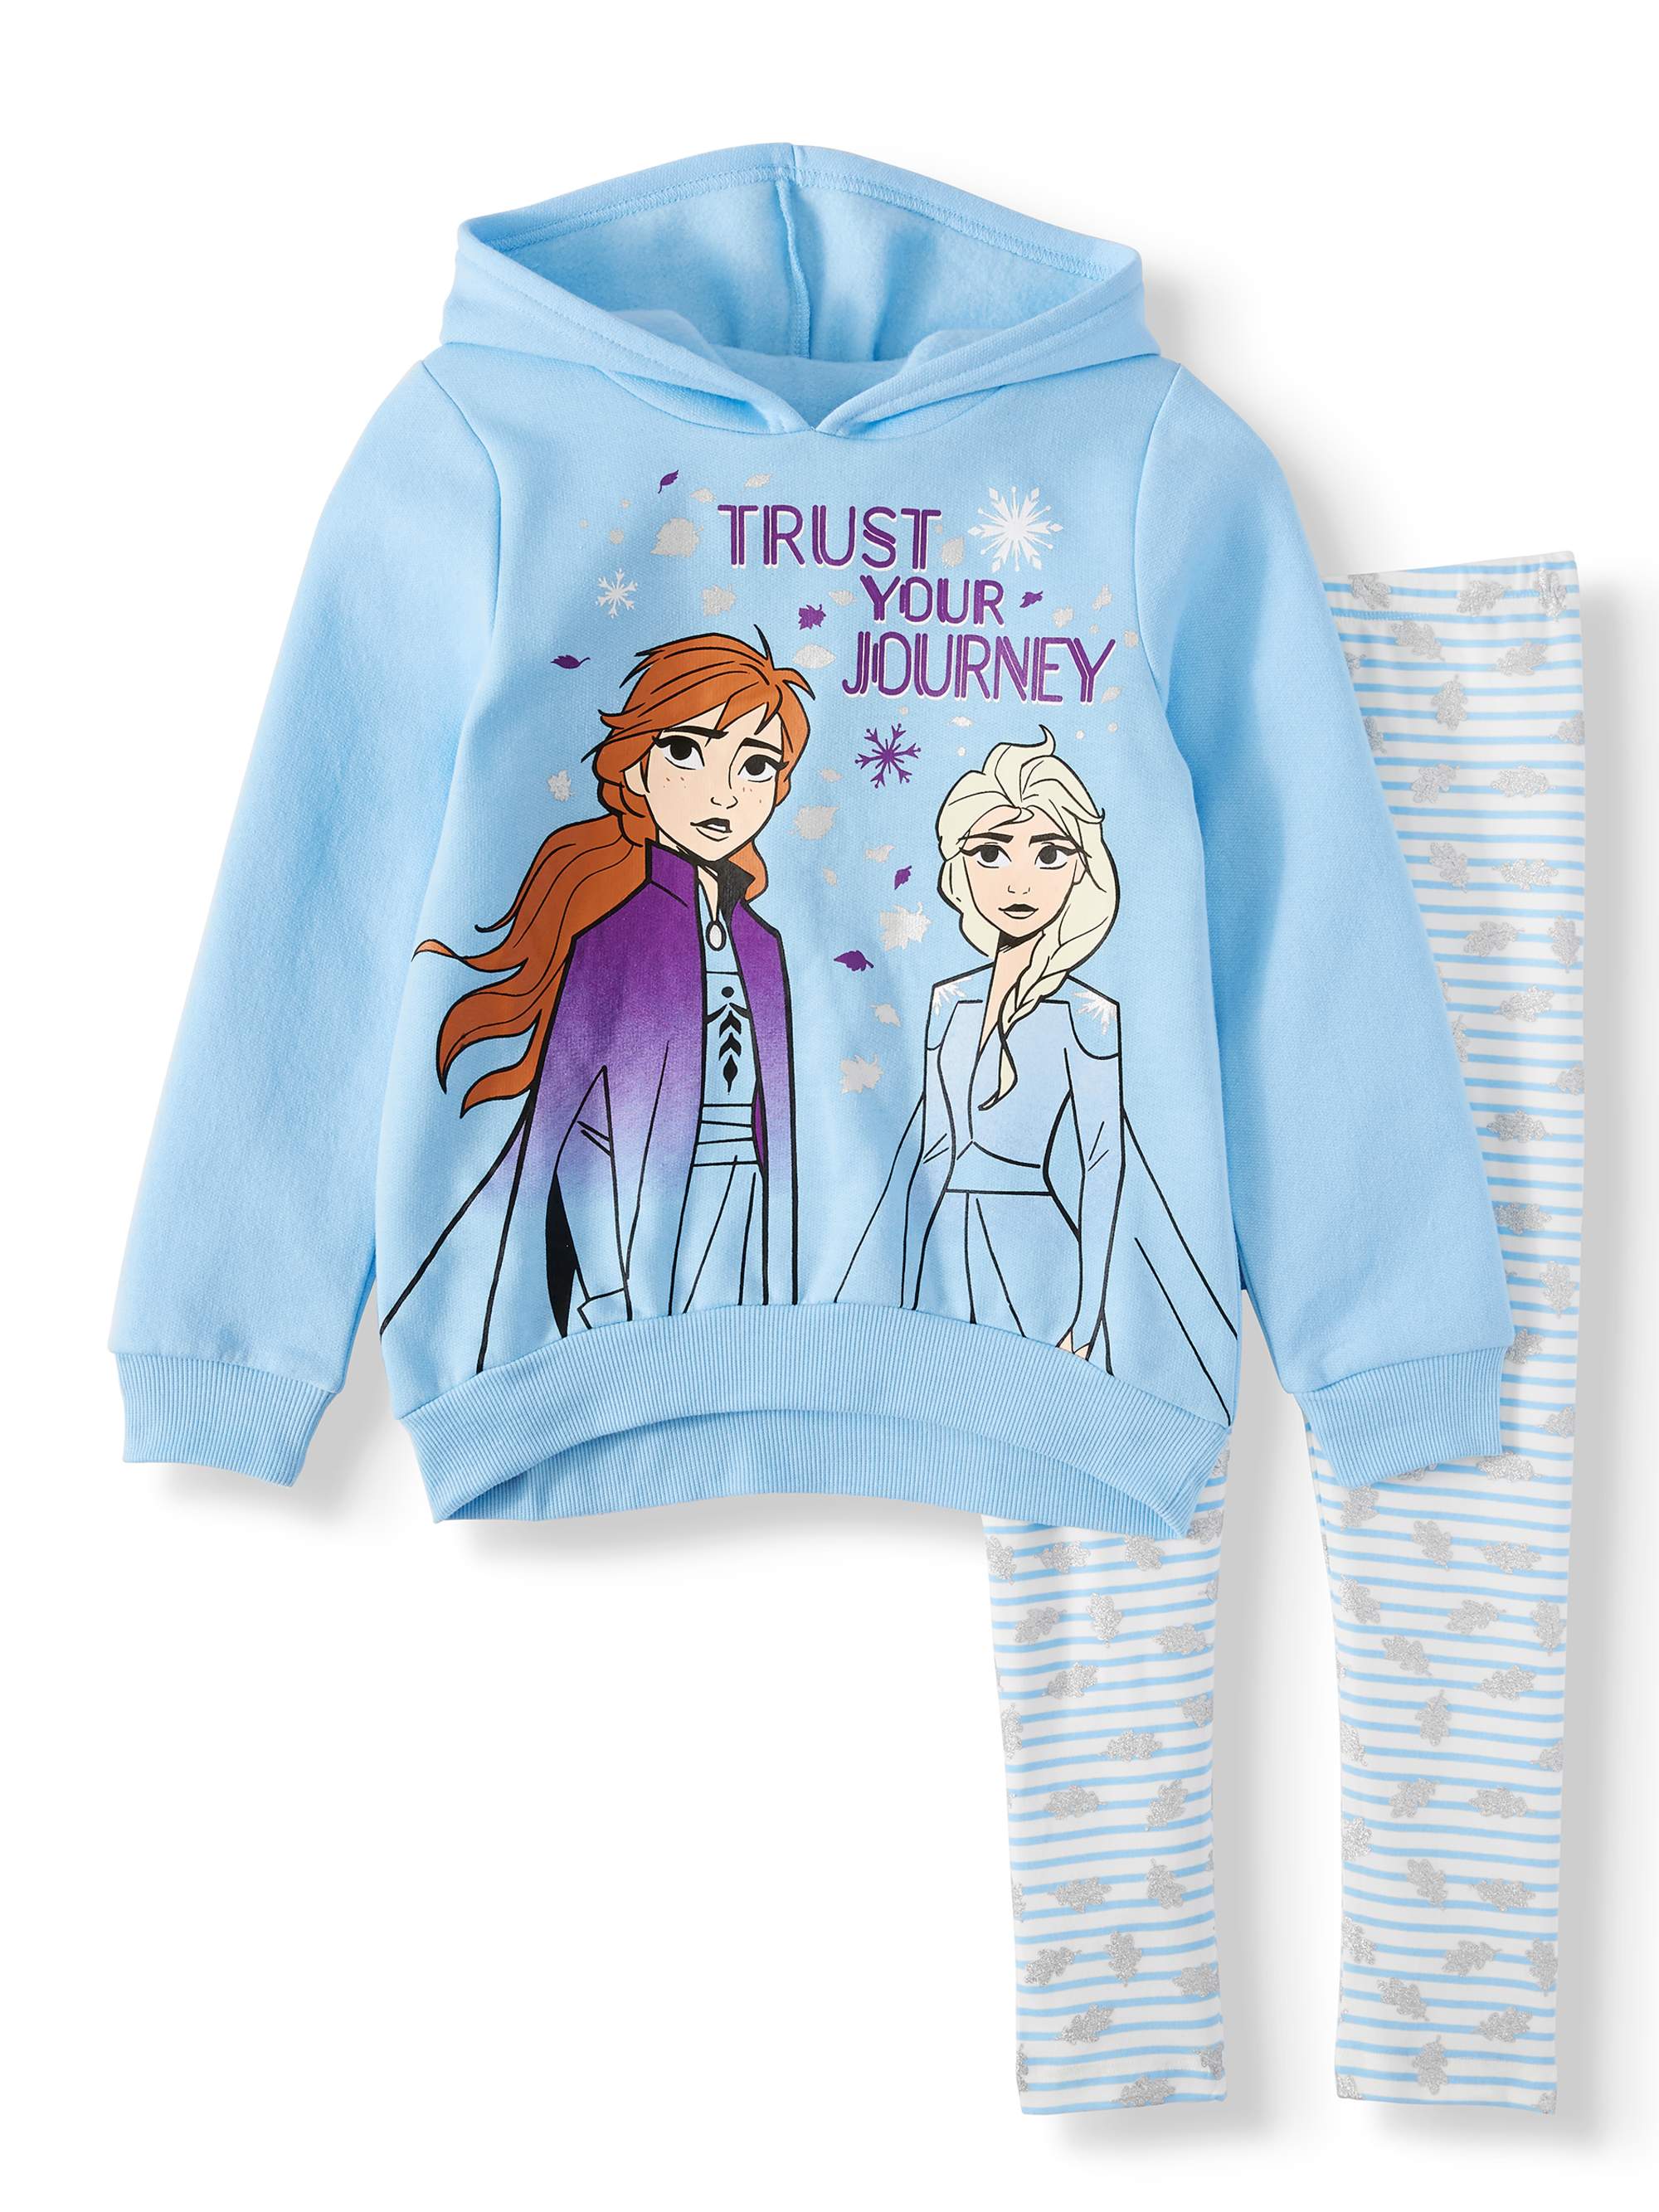 Disney Frozen 2 Anna & Elsa Toddler Girl Fleece Hoodie & Printed Leggings, 2pc Outfit Set - image 1 of 2